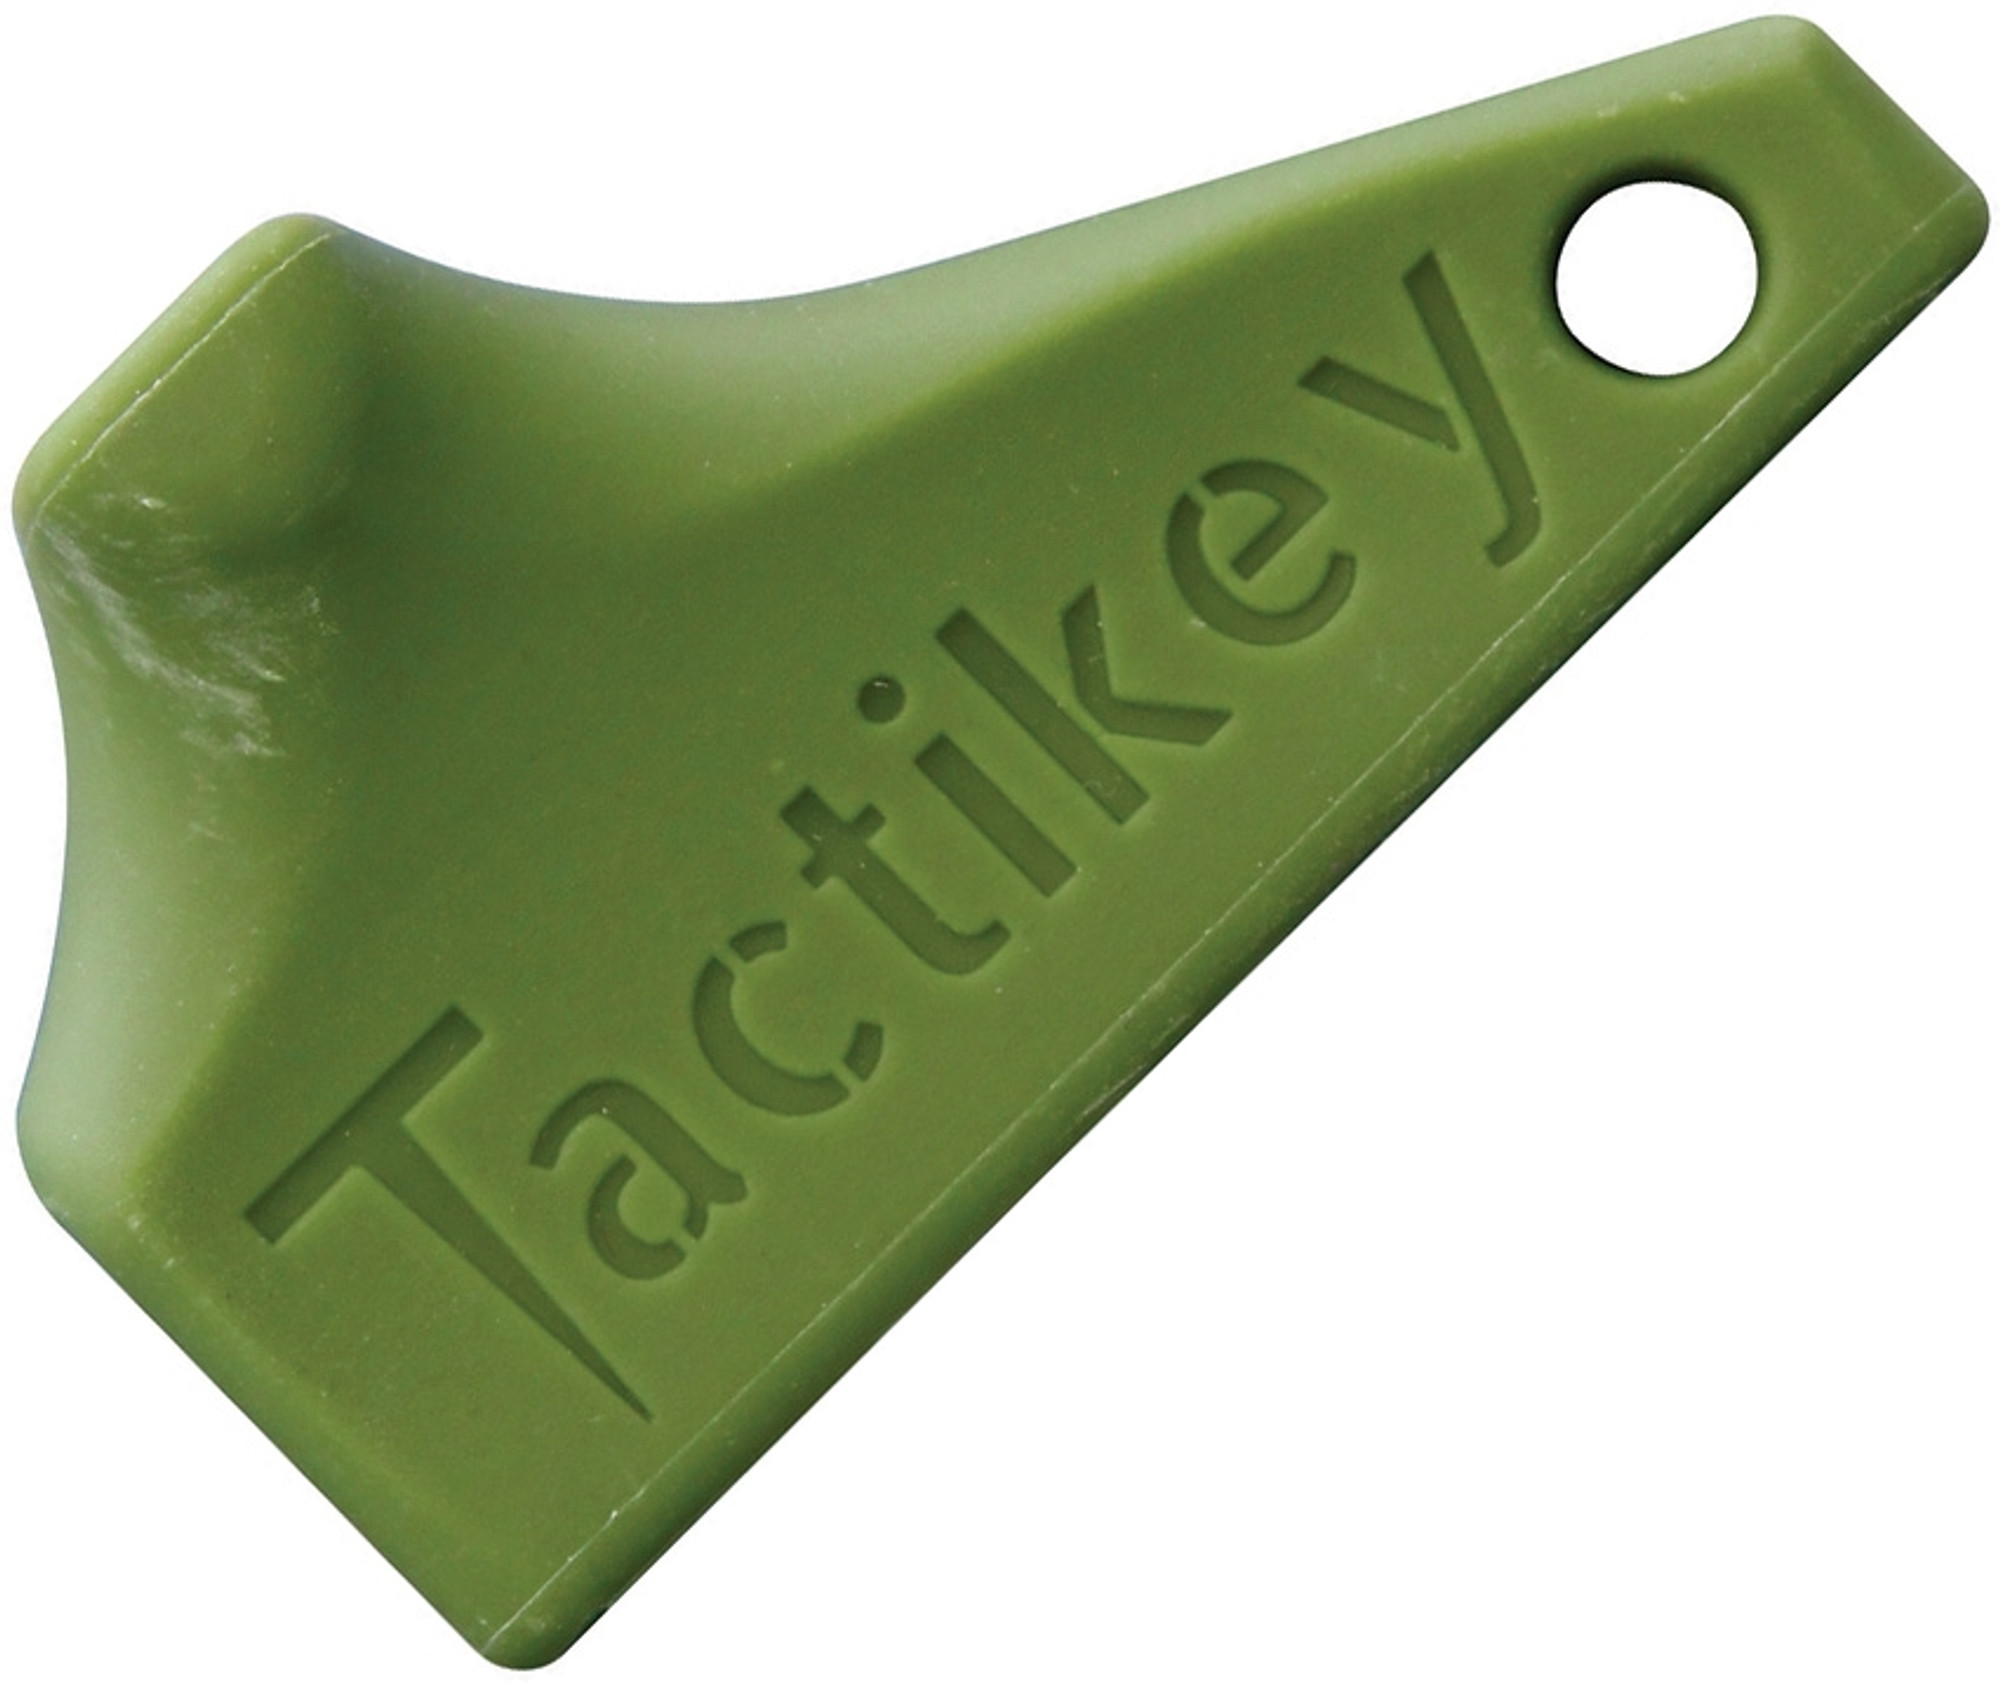 Tactikey EDC Self-Defense Tool TTK002